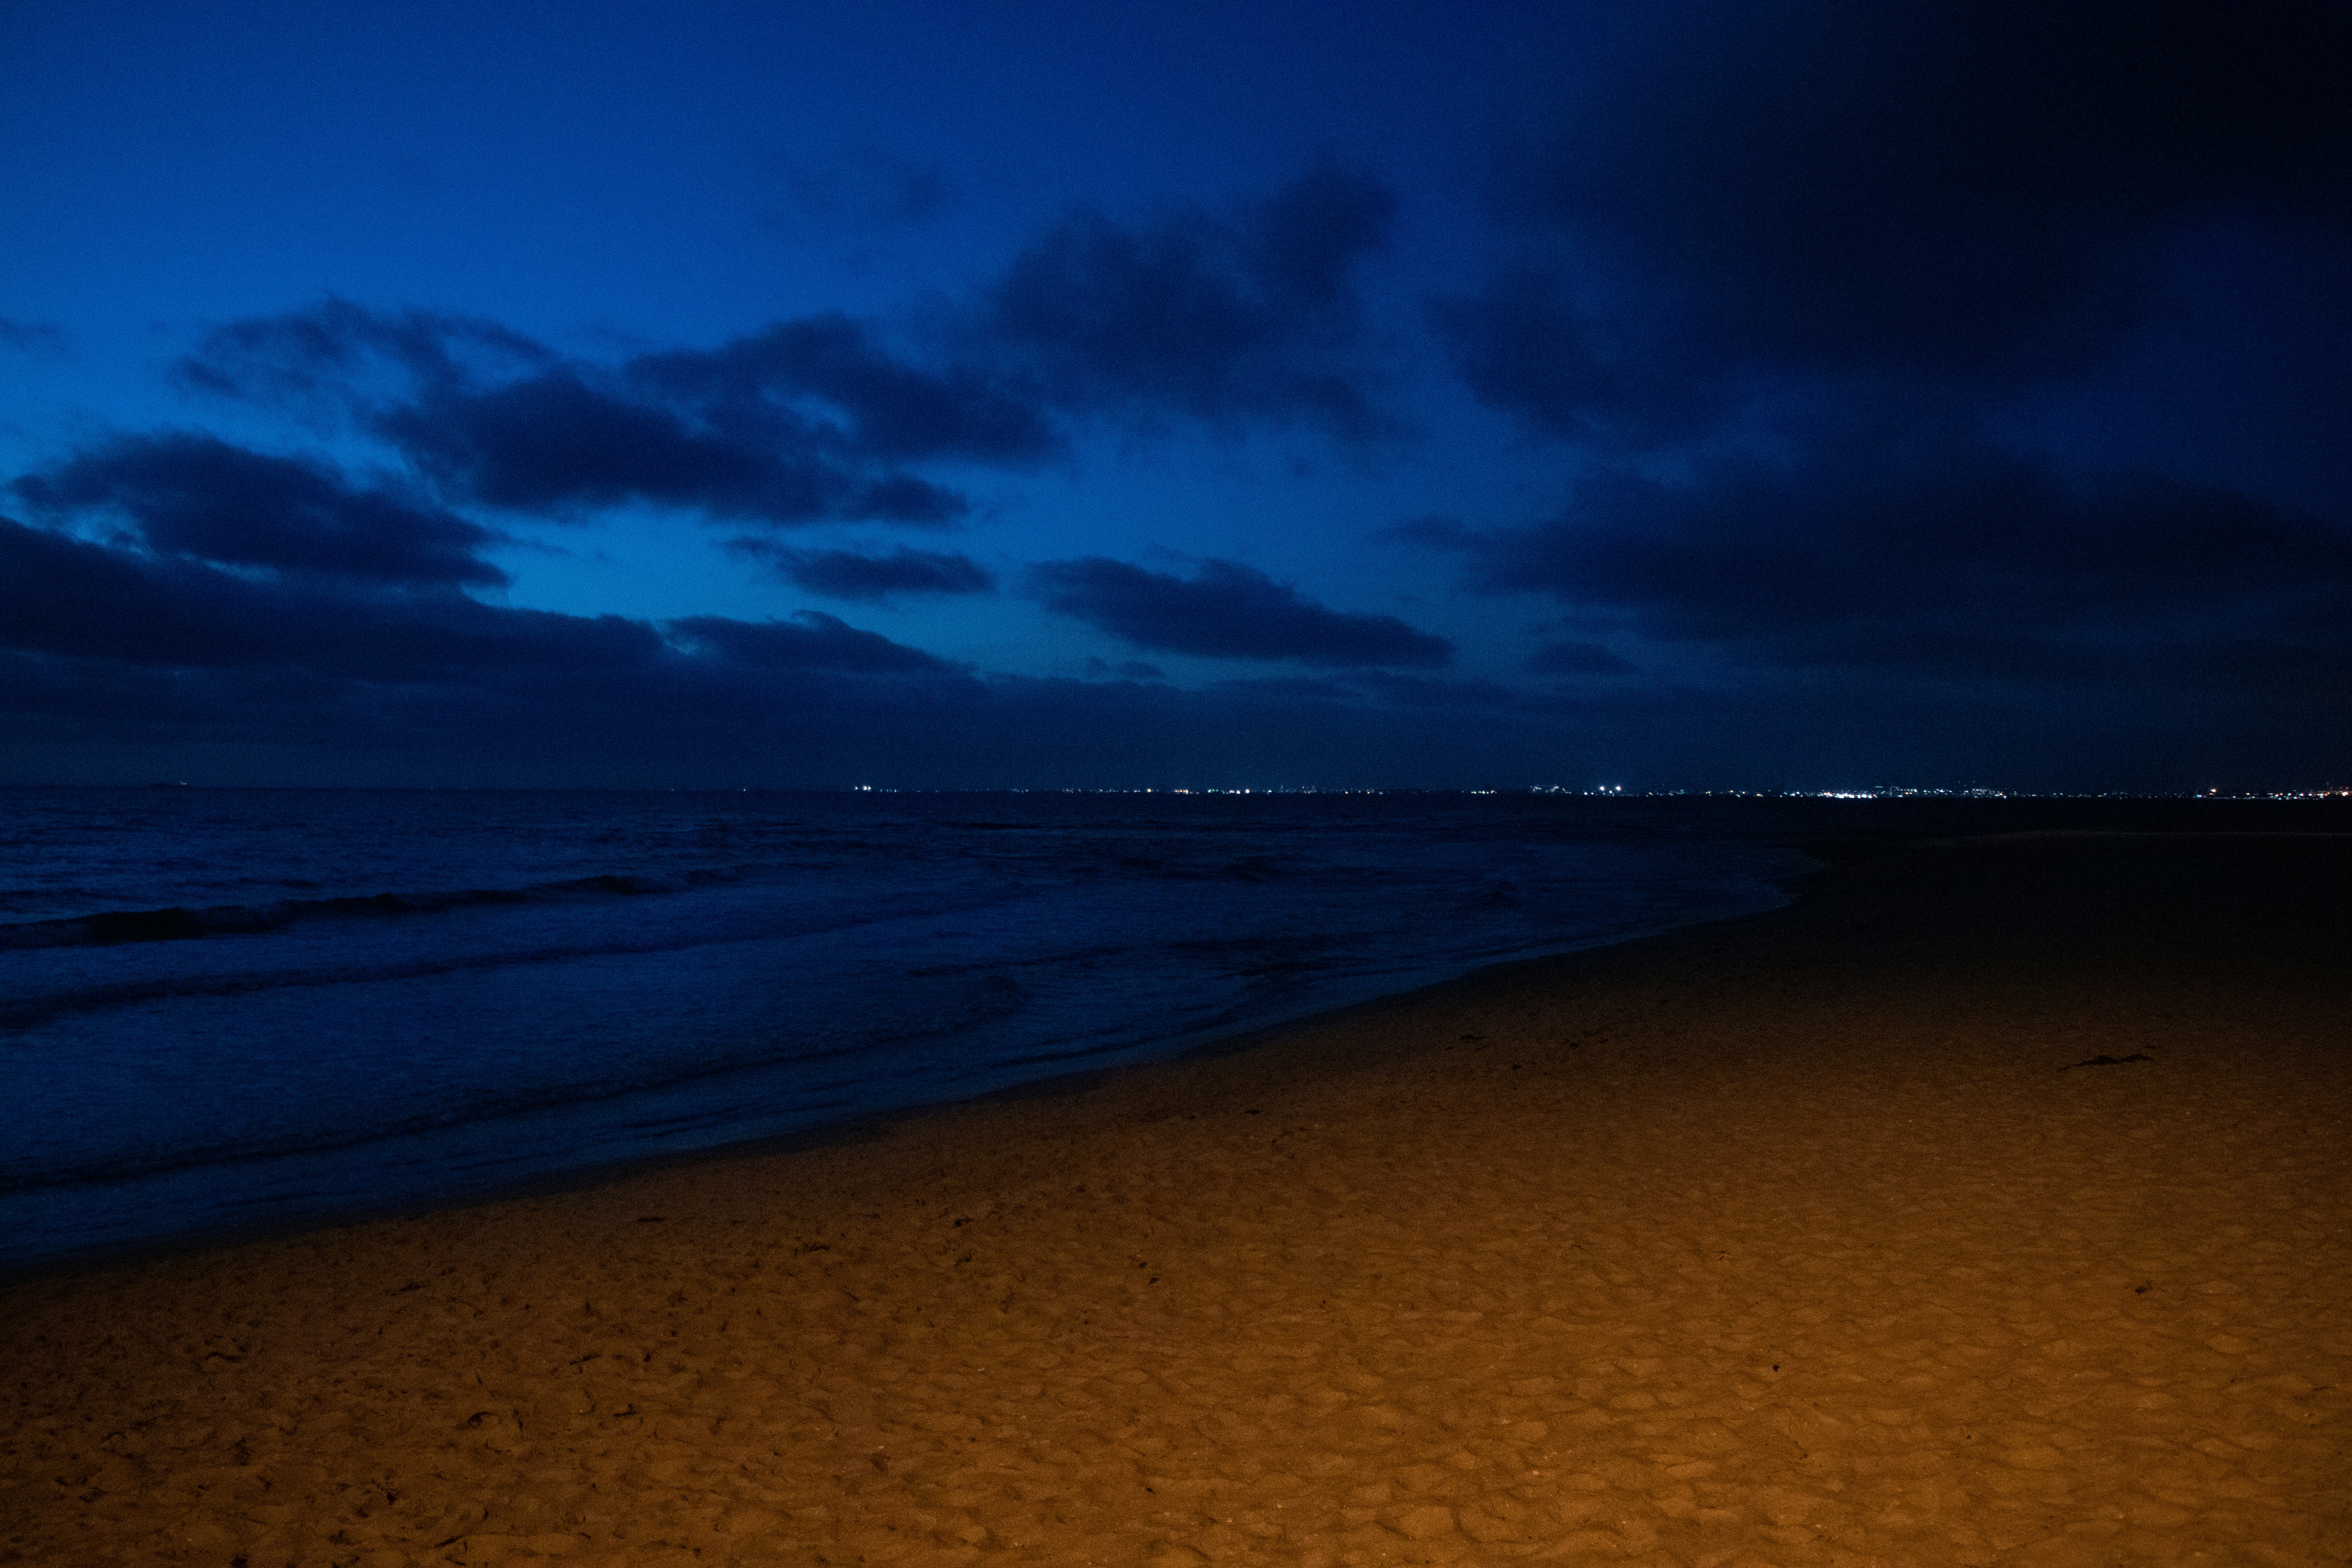 ocean during nighttime